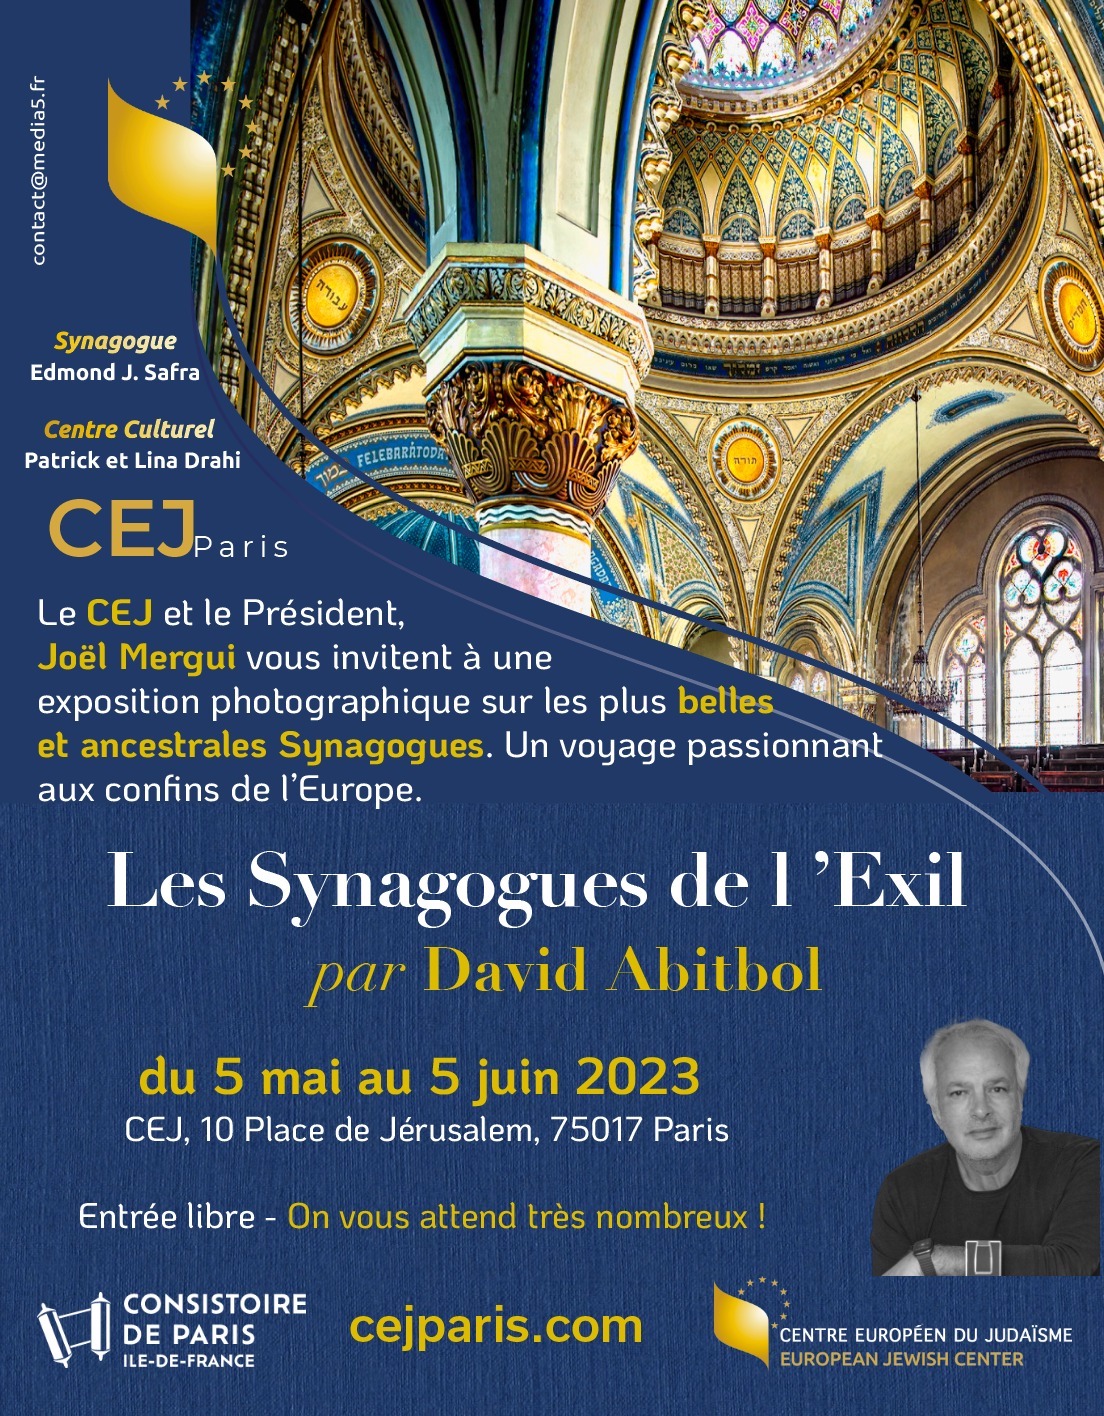 Exposition “Les Synagogues de l’Exil” par David Abitbol